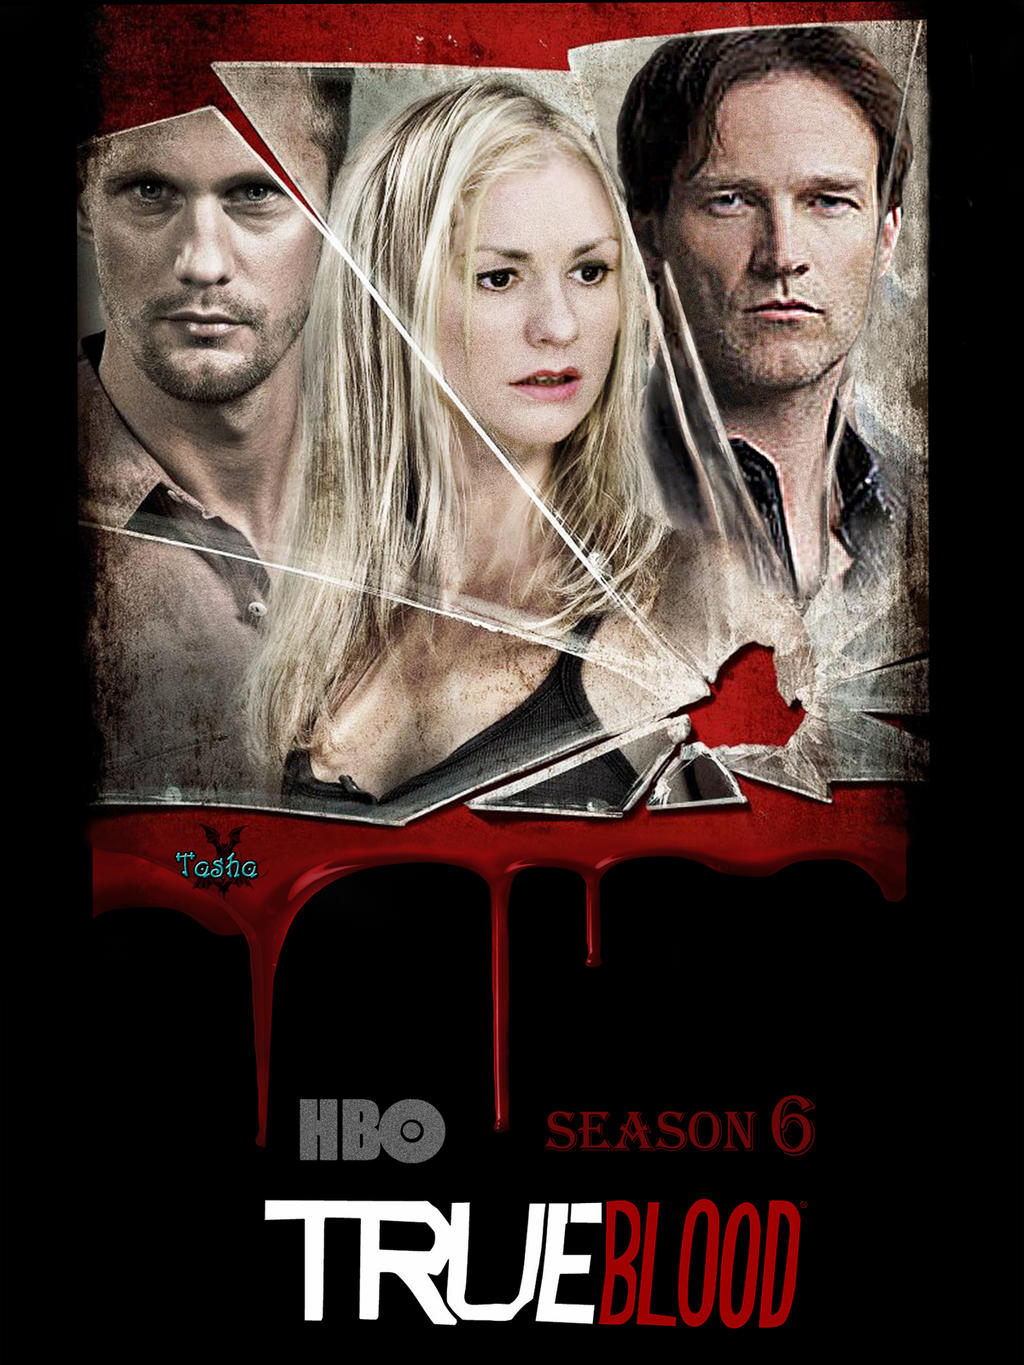 True blood, 6 season by Tasha507 on DeviantArt